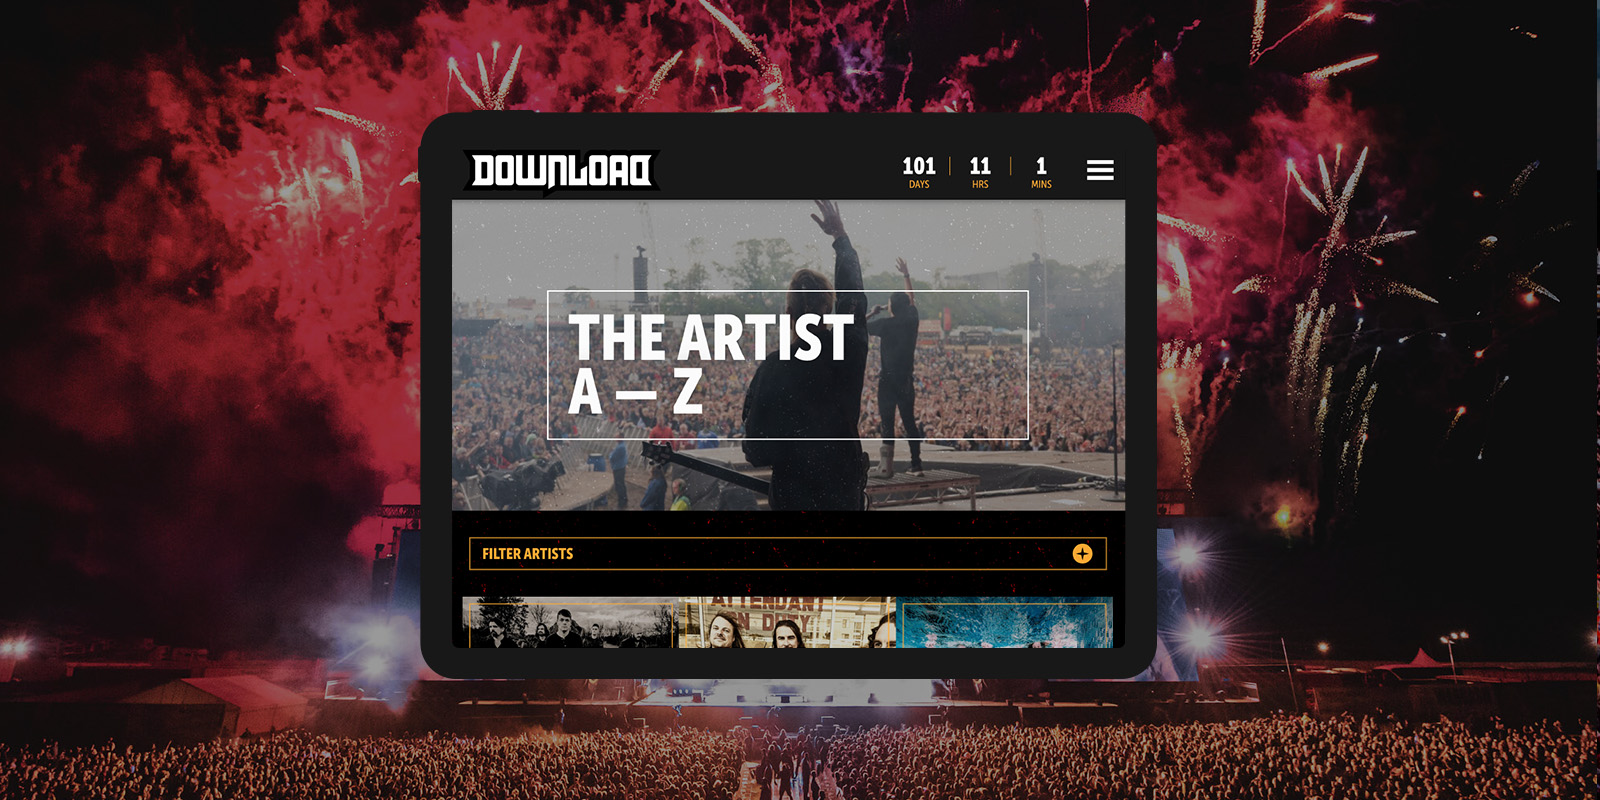 The Artist A-Z - Download Festival website